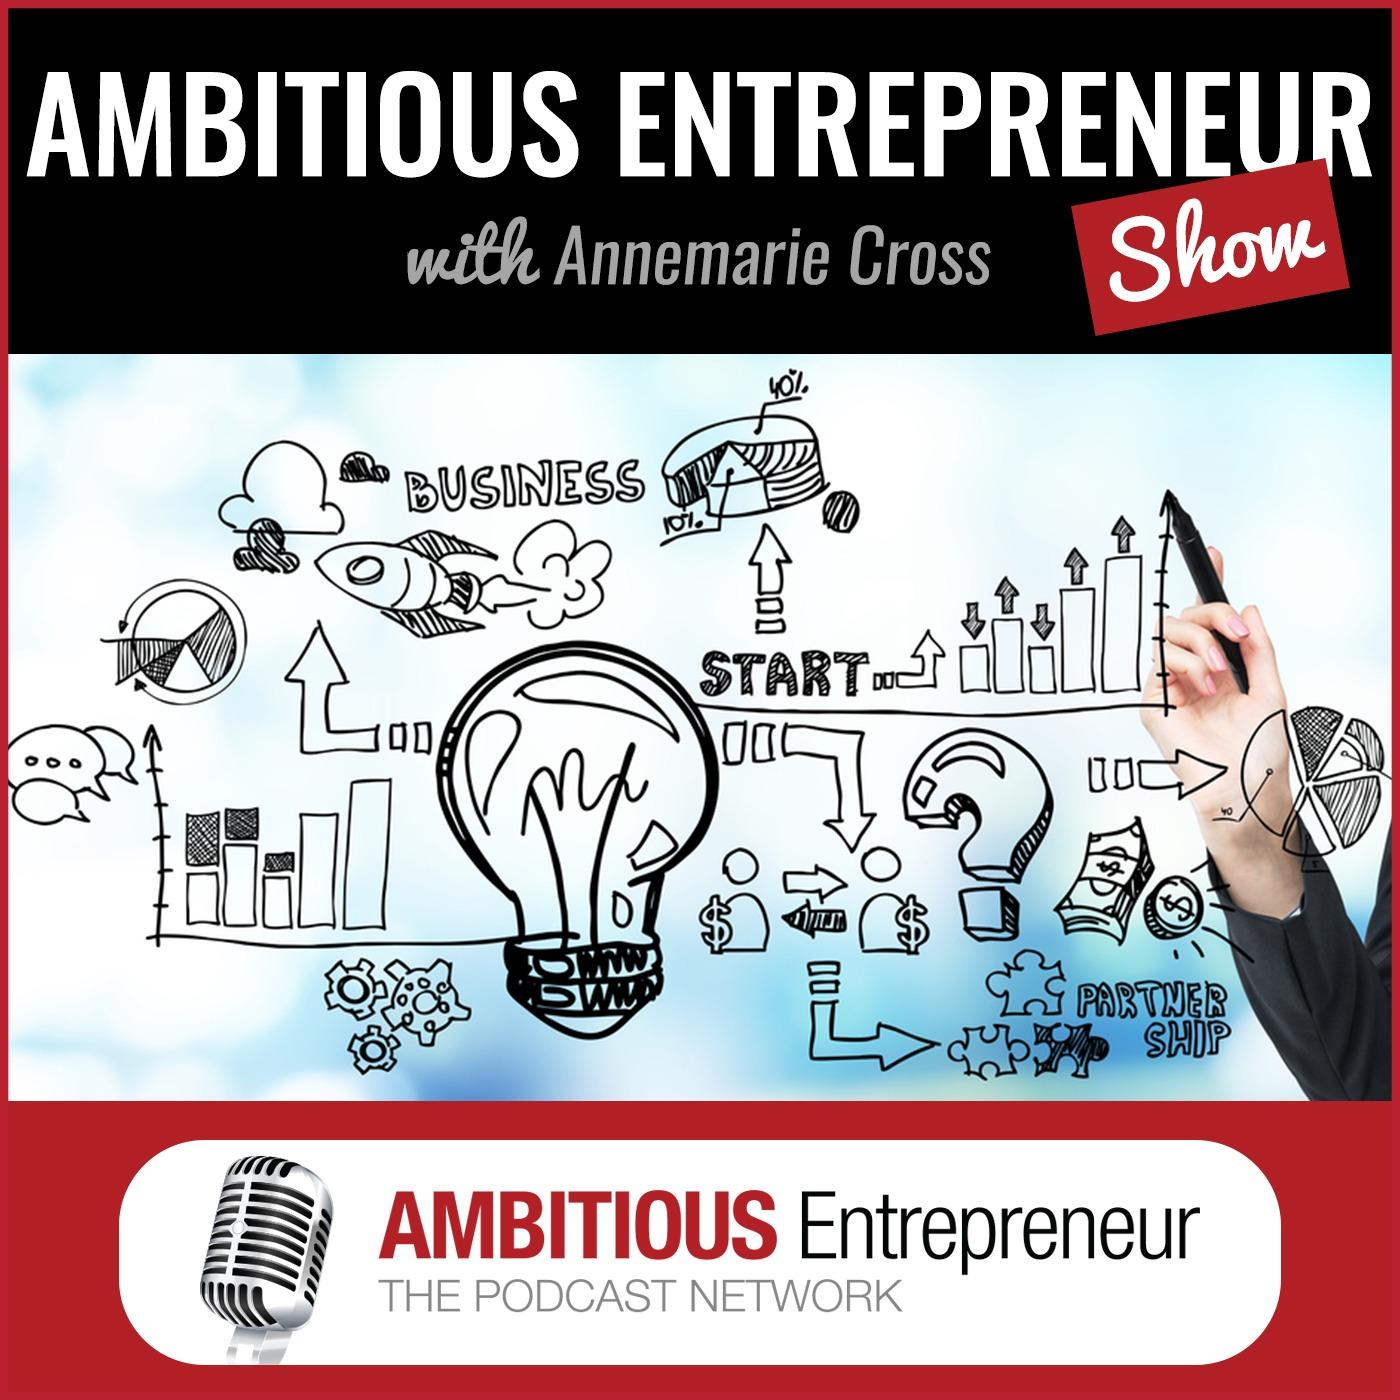 Ambitious Entrepreneur Podcast Network